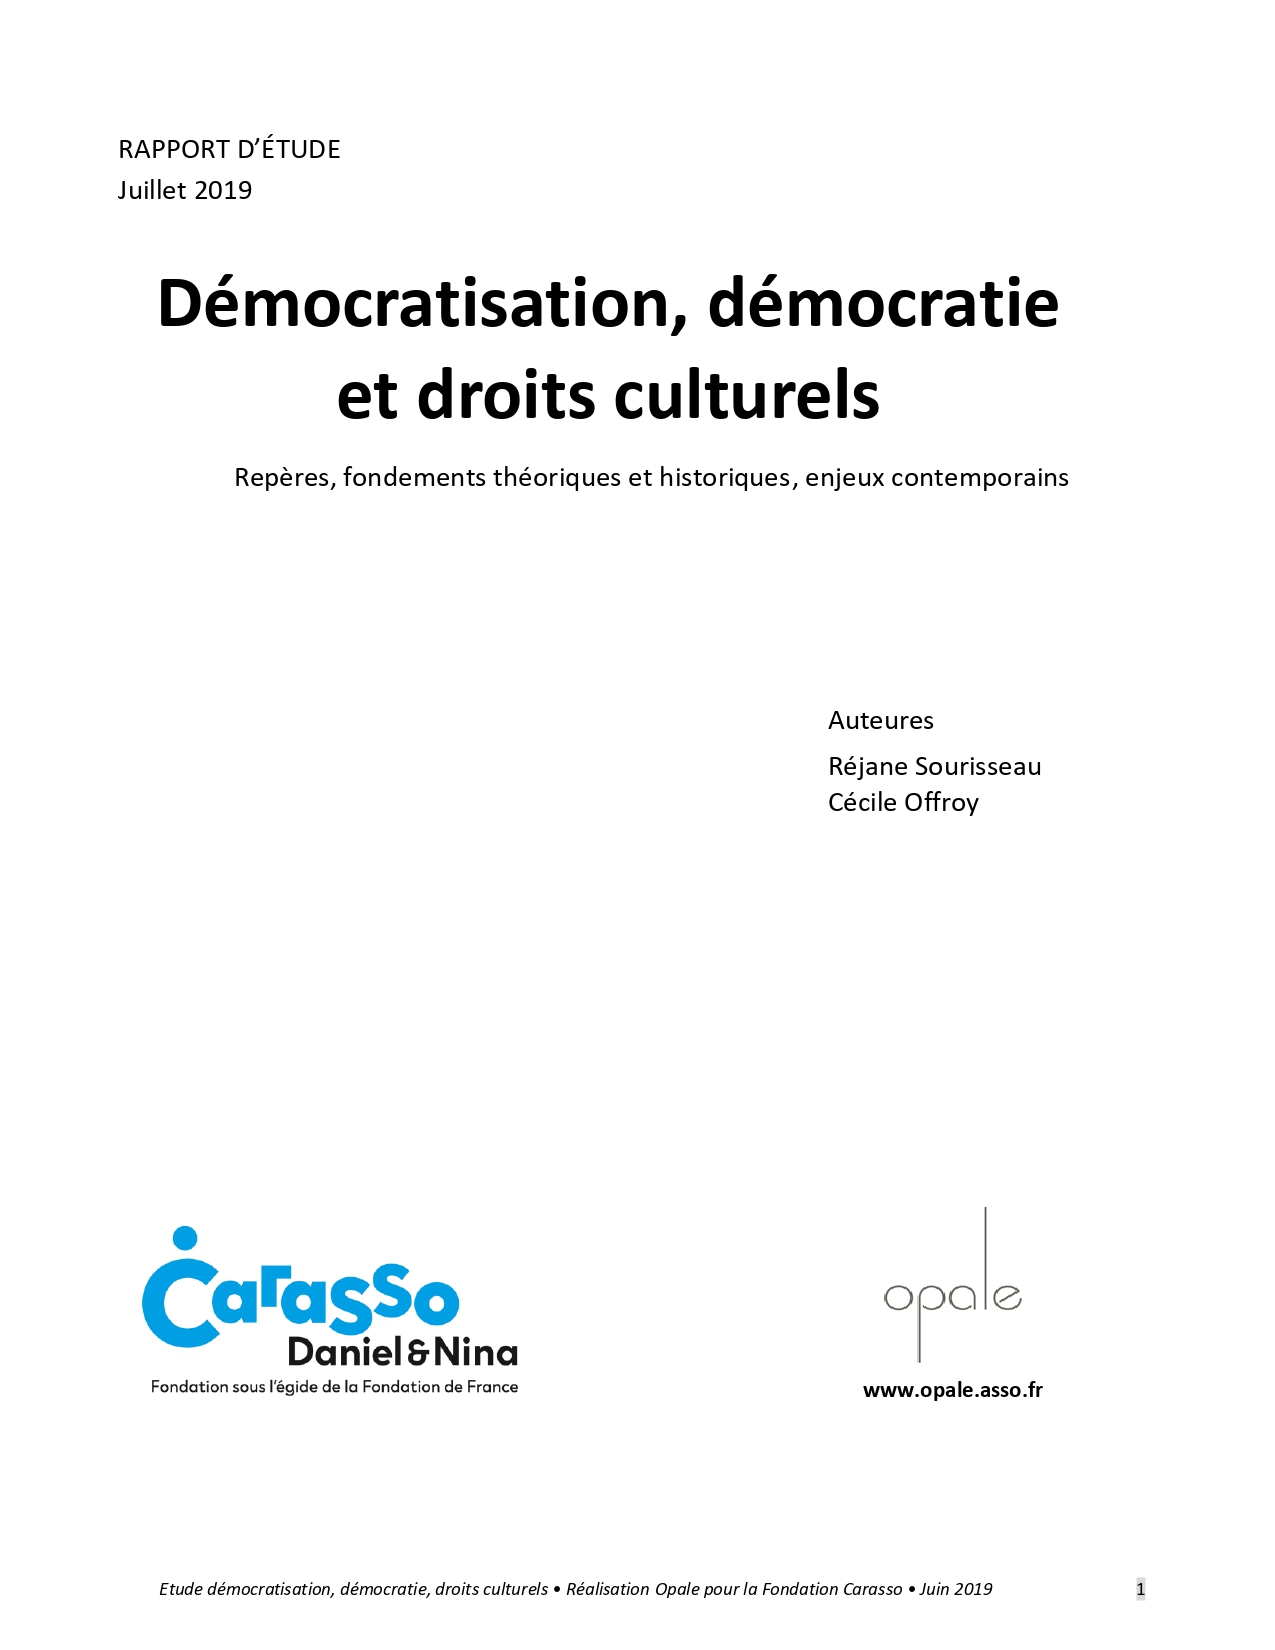 20200224_Etude_democratisation_democratie_droits_culturels_page-0001